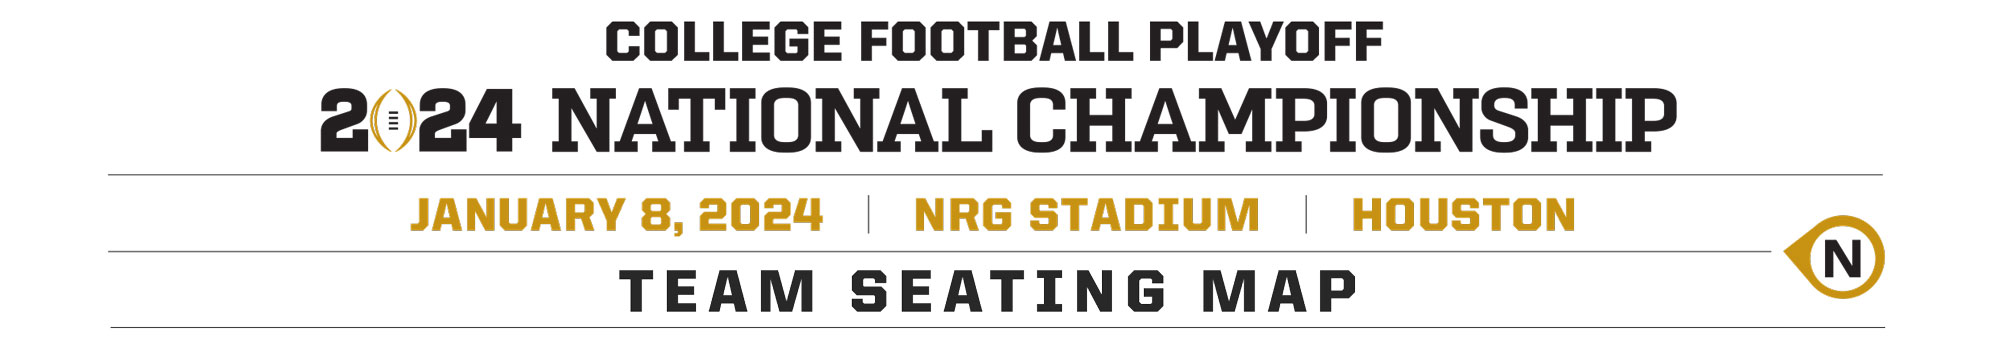 2024 National Championship - NRG Stadium Seat Map